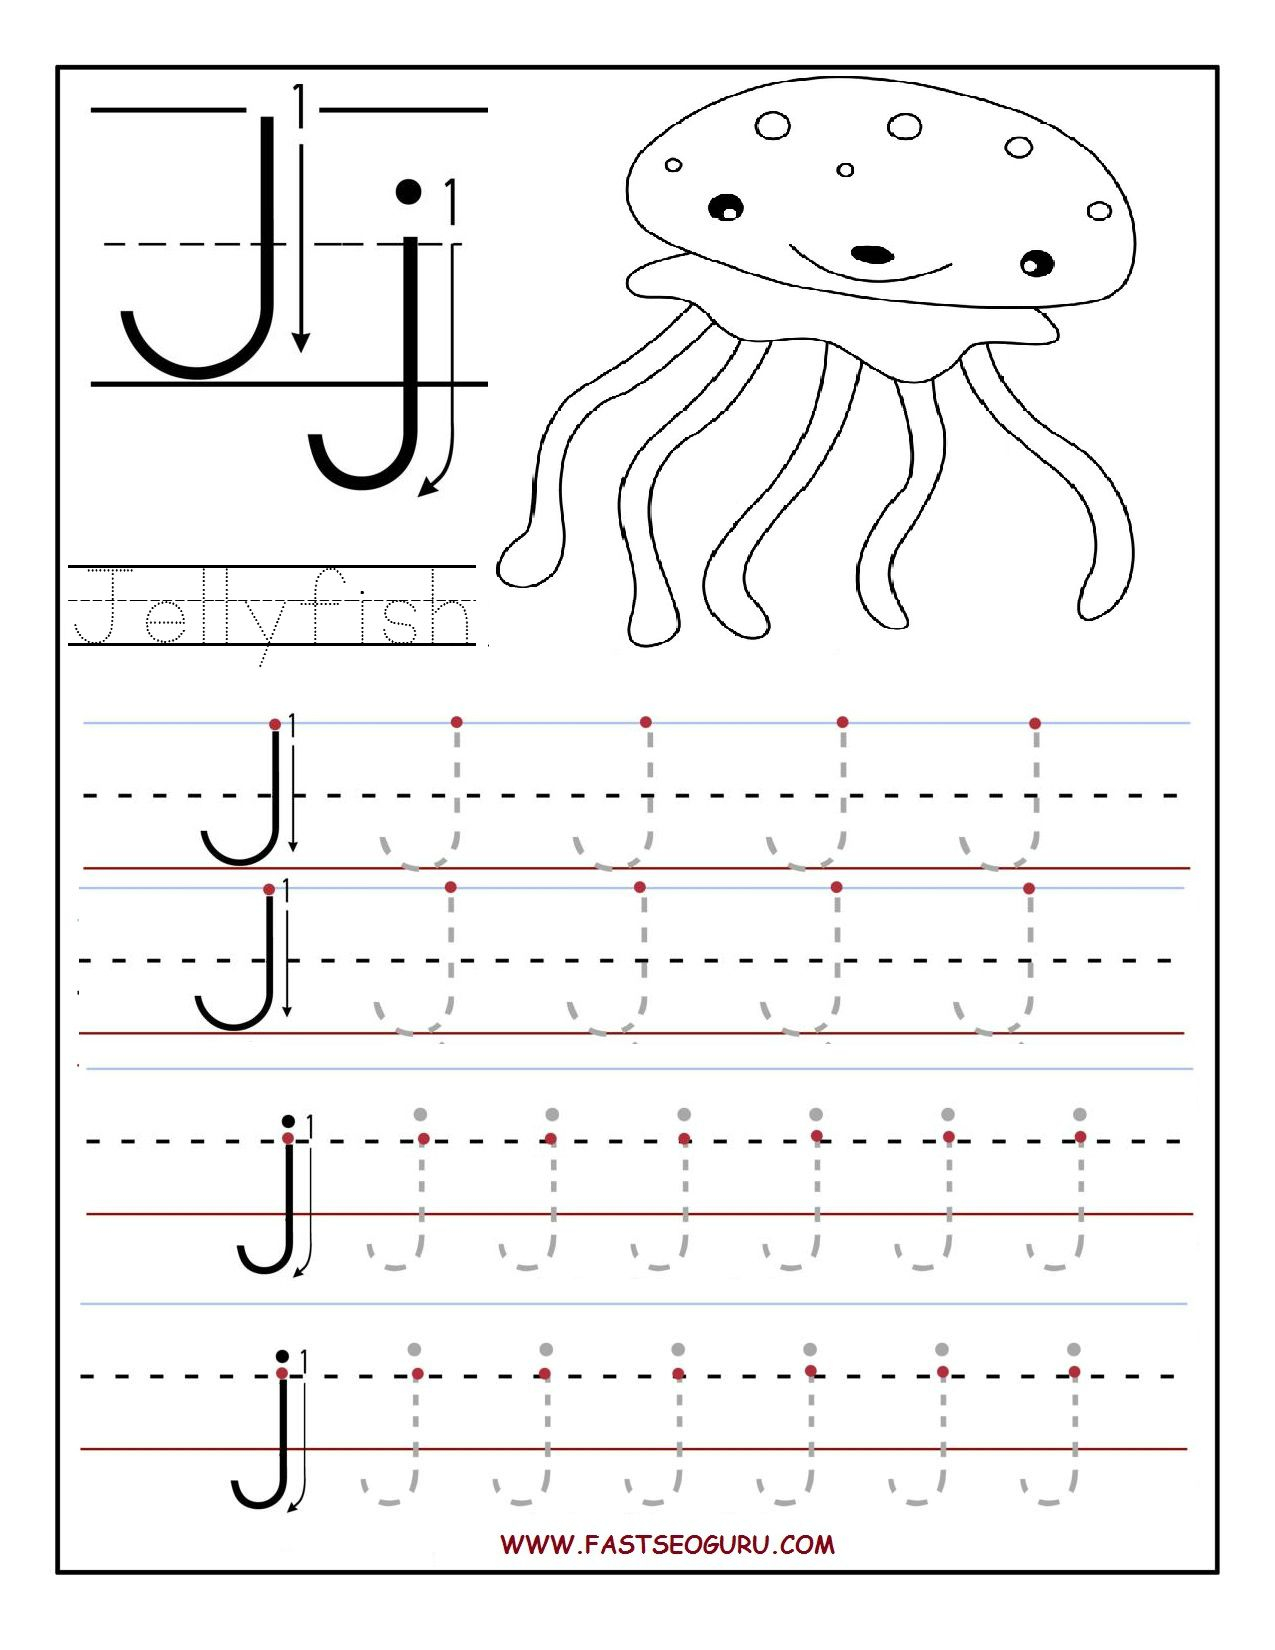 Printable Letter J Tracing Worksheets For Preschool intended for Tracing Letter J